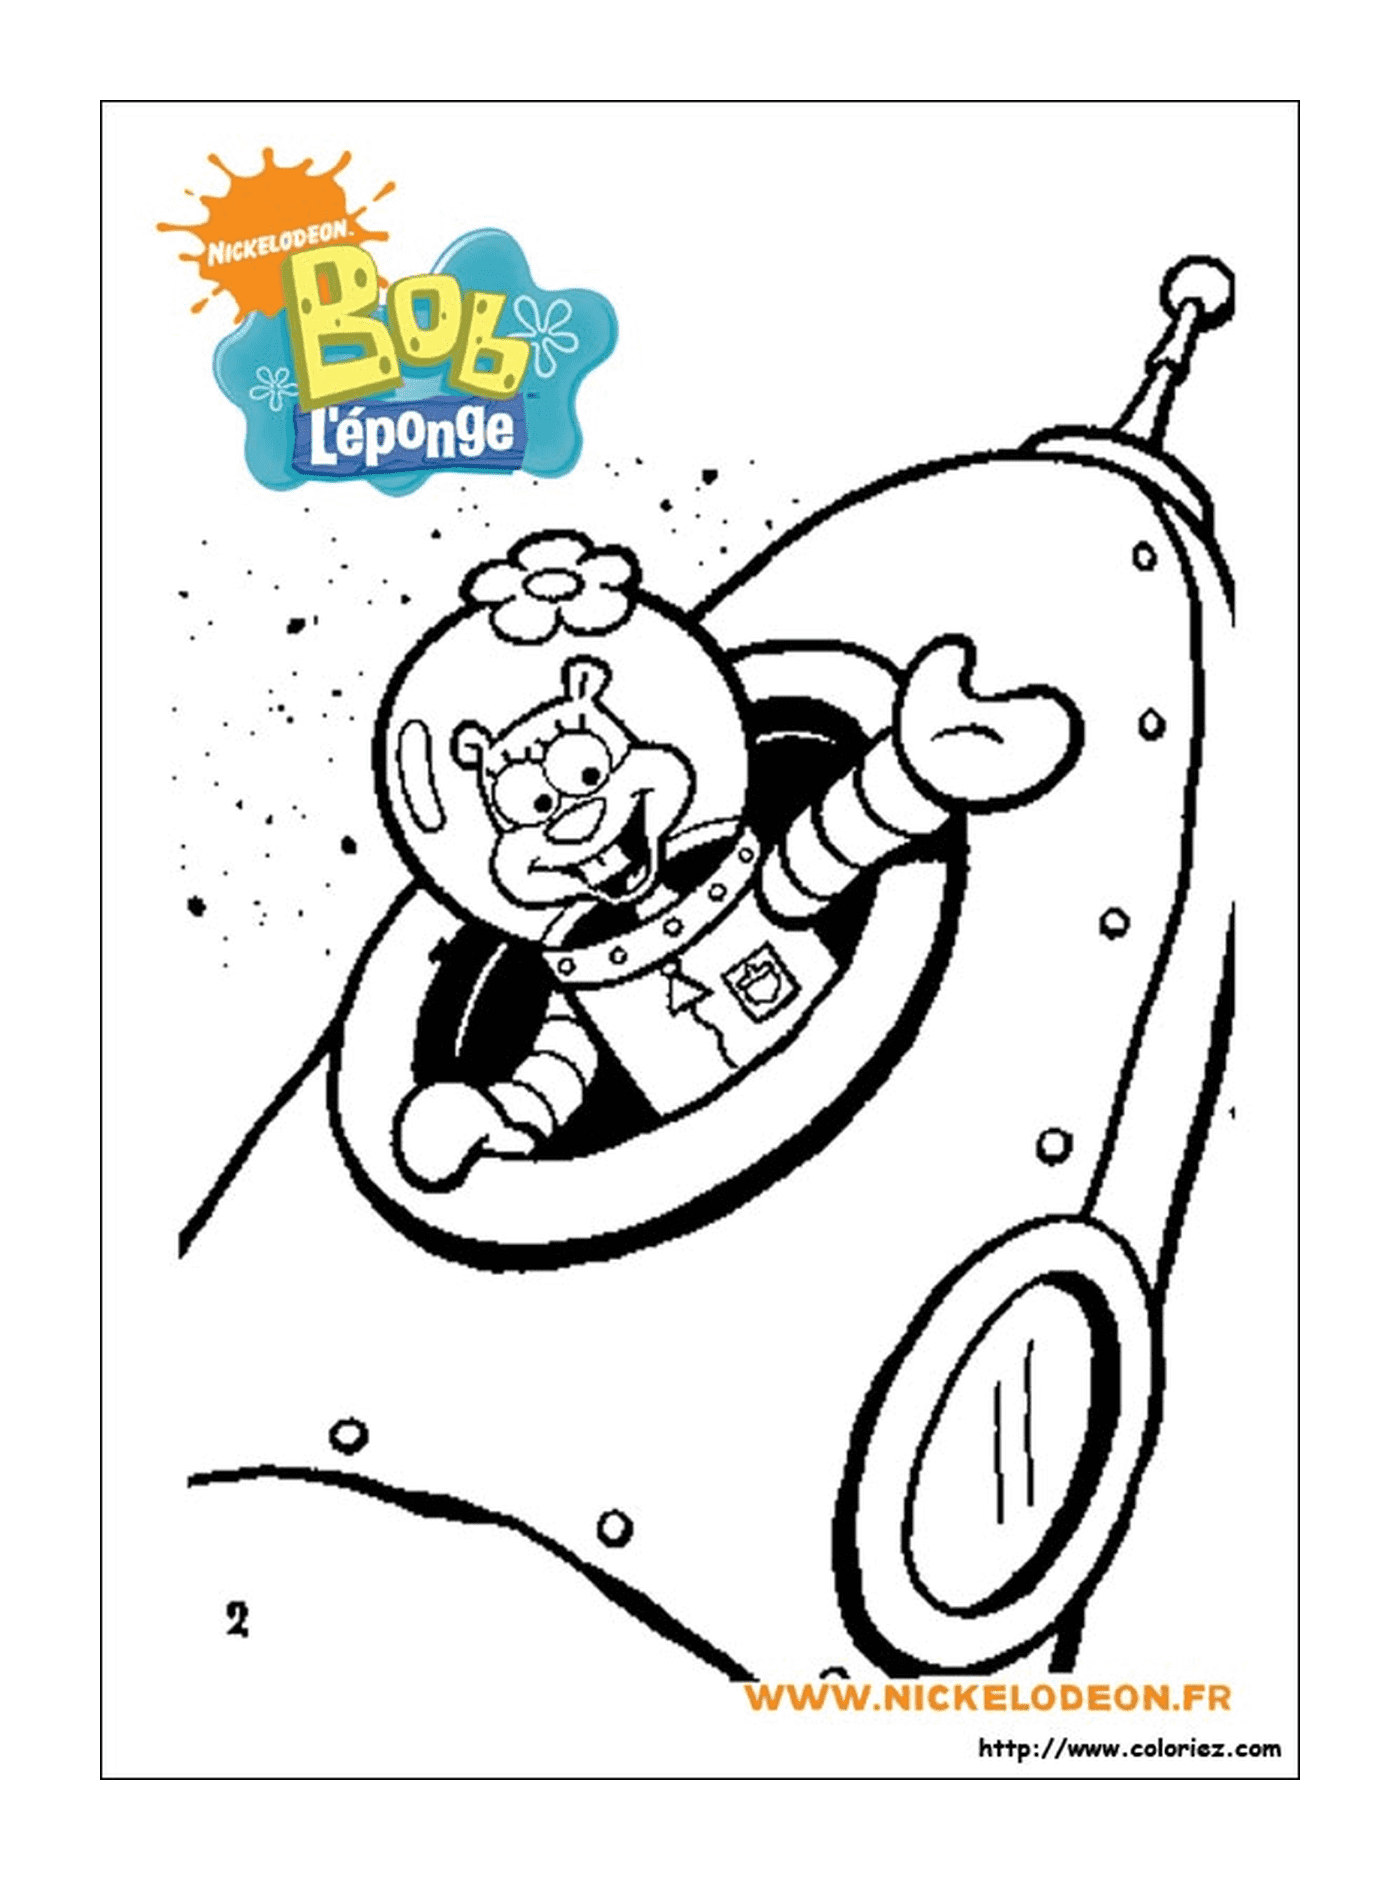  Spongebob,一个卡通人物, 打扮成宇航员 